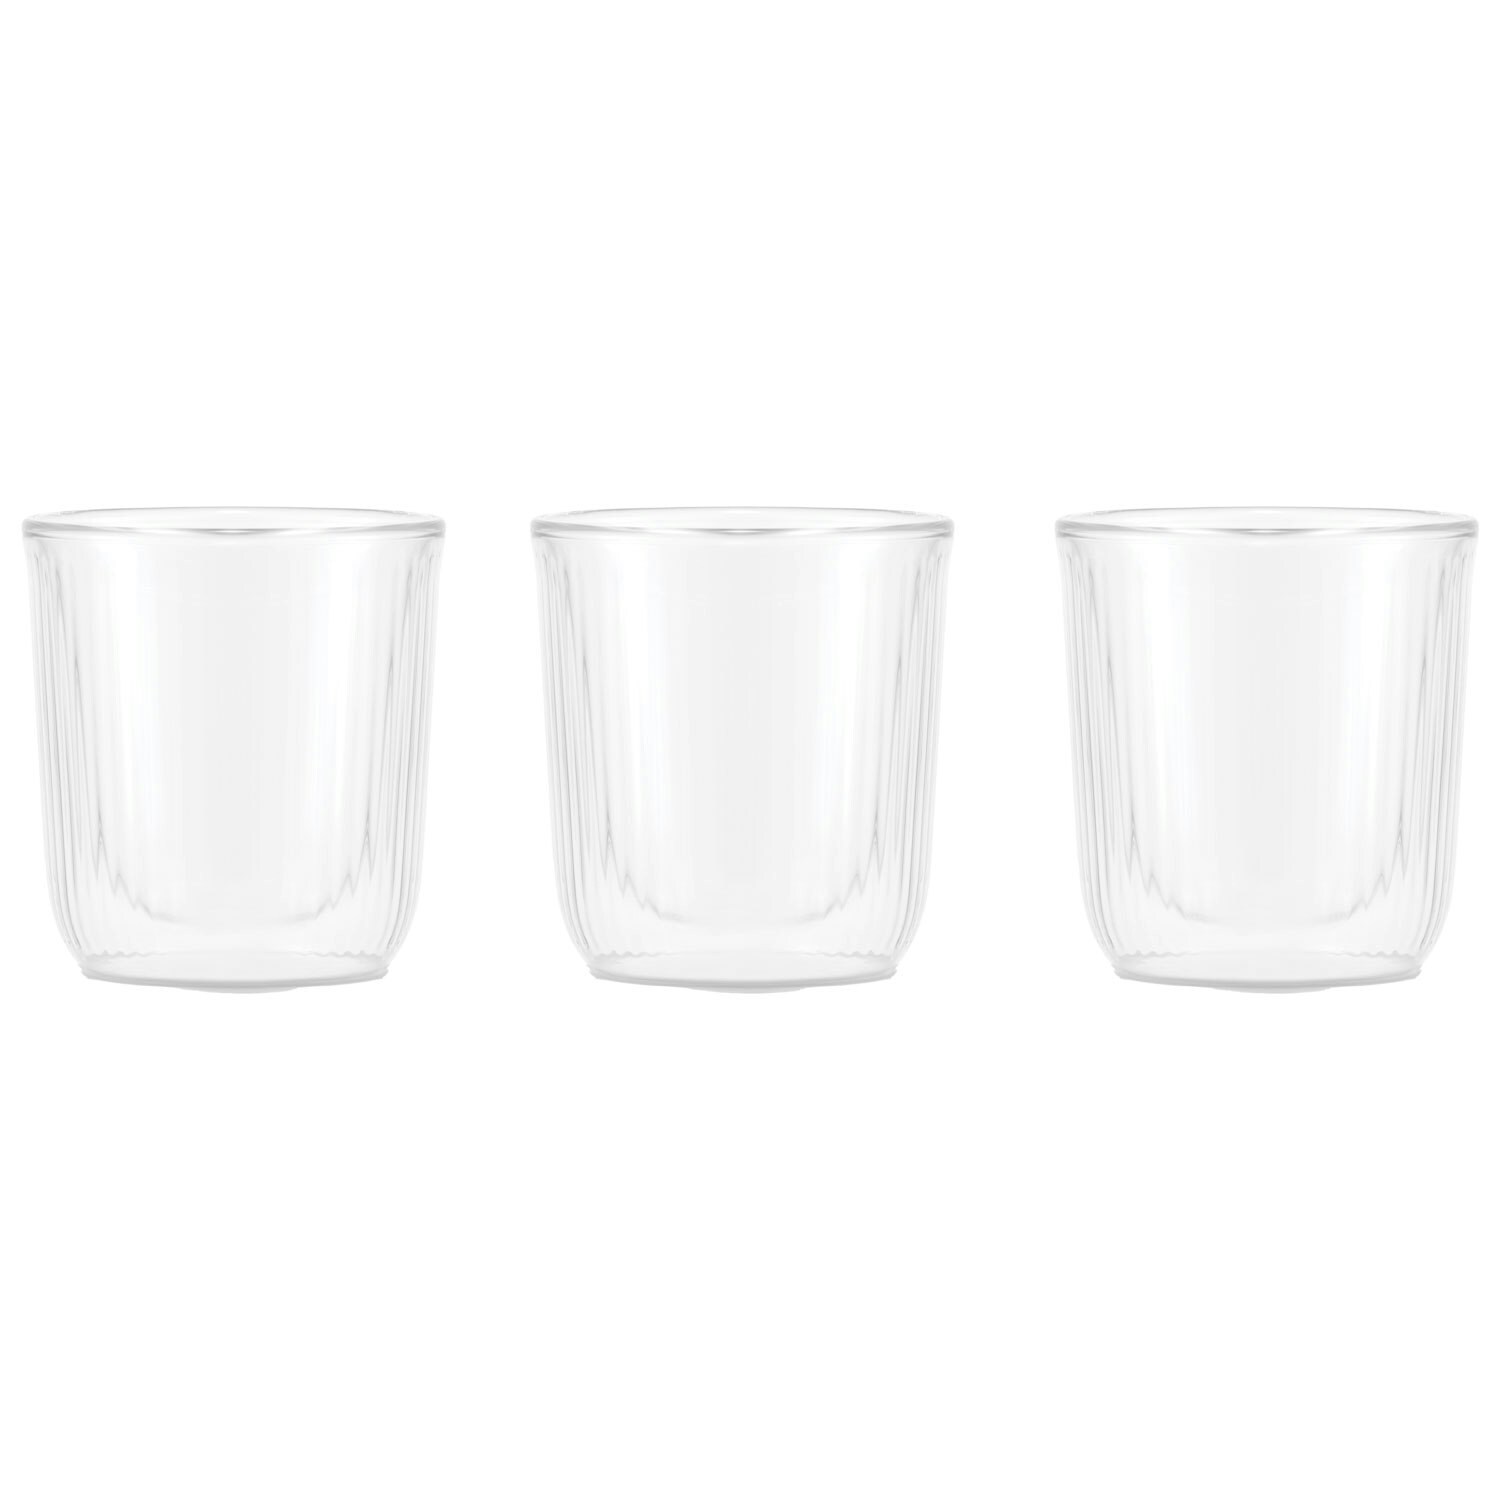 https://royaldesign.com/image/2/bodum-douro-sake-glasses-3-pack-6-cl-0